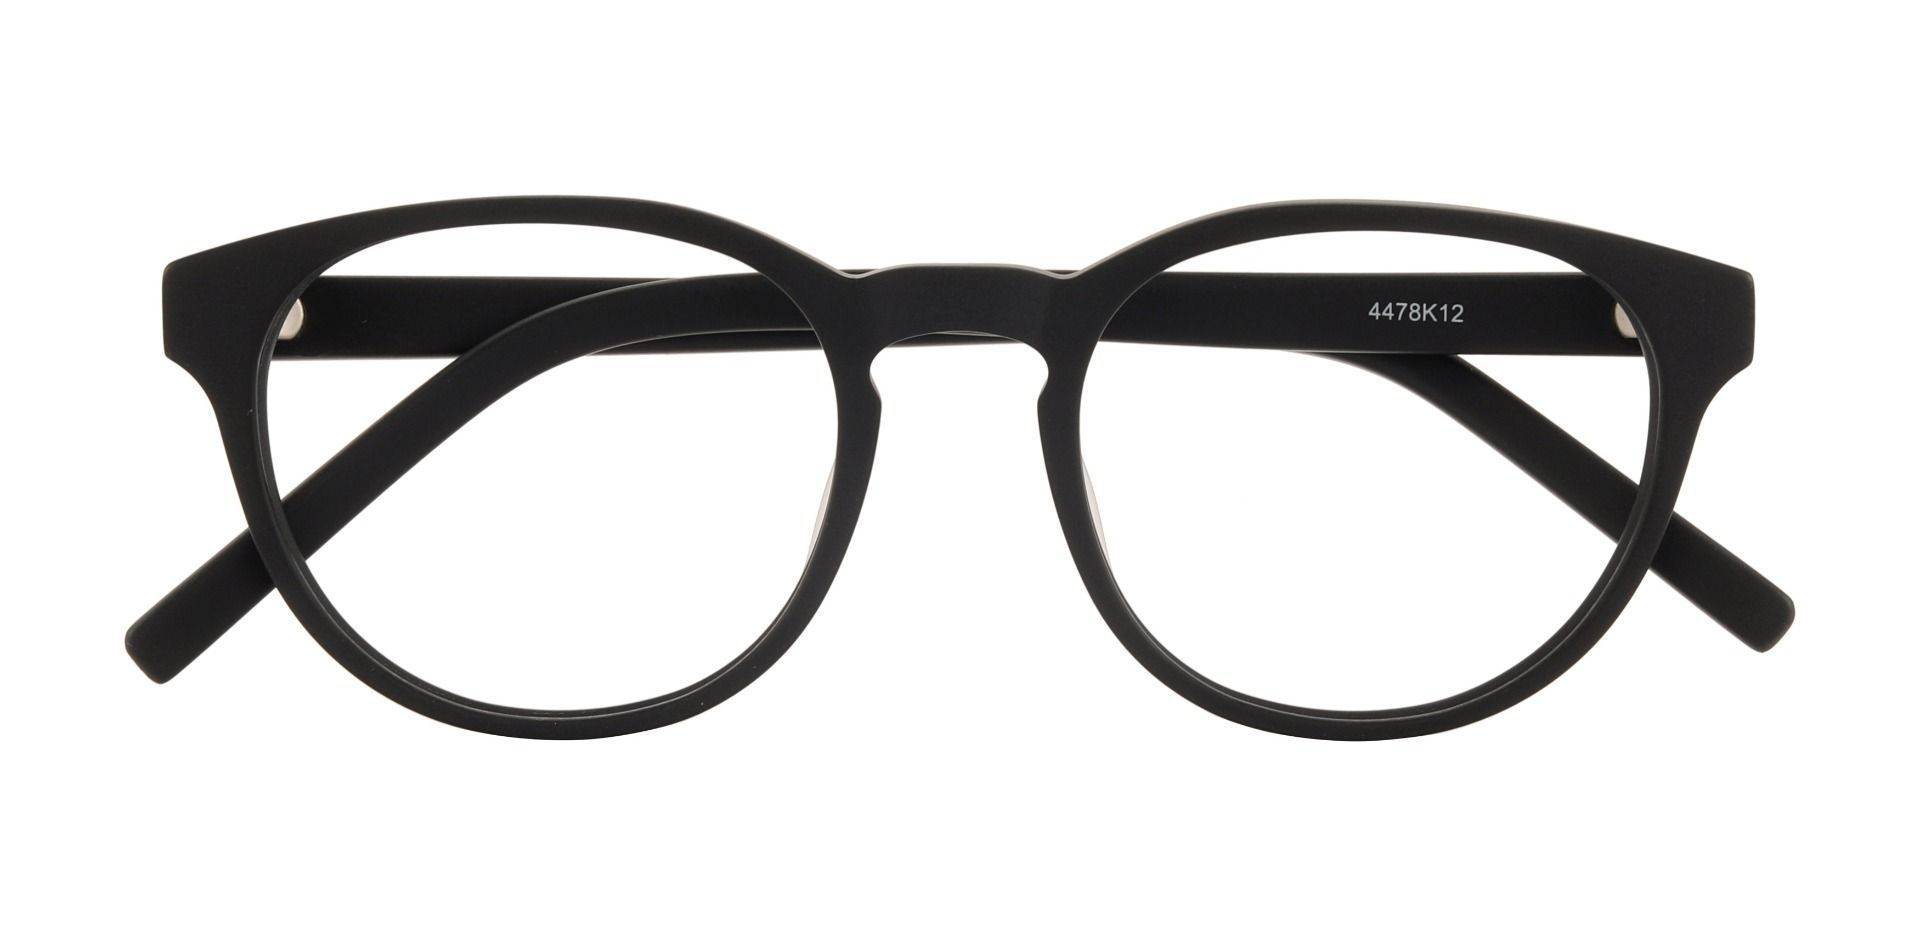 Wayland Oval Prescription Glasses - Black